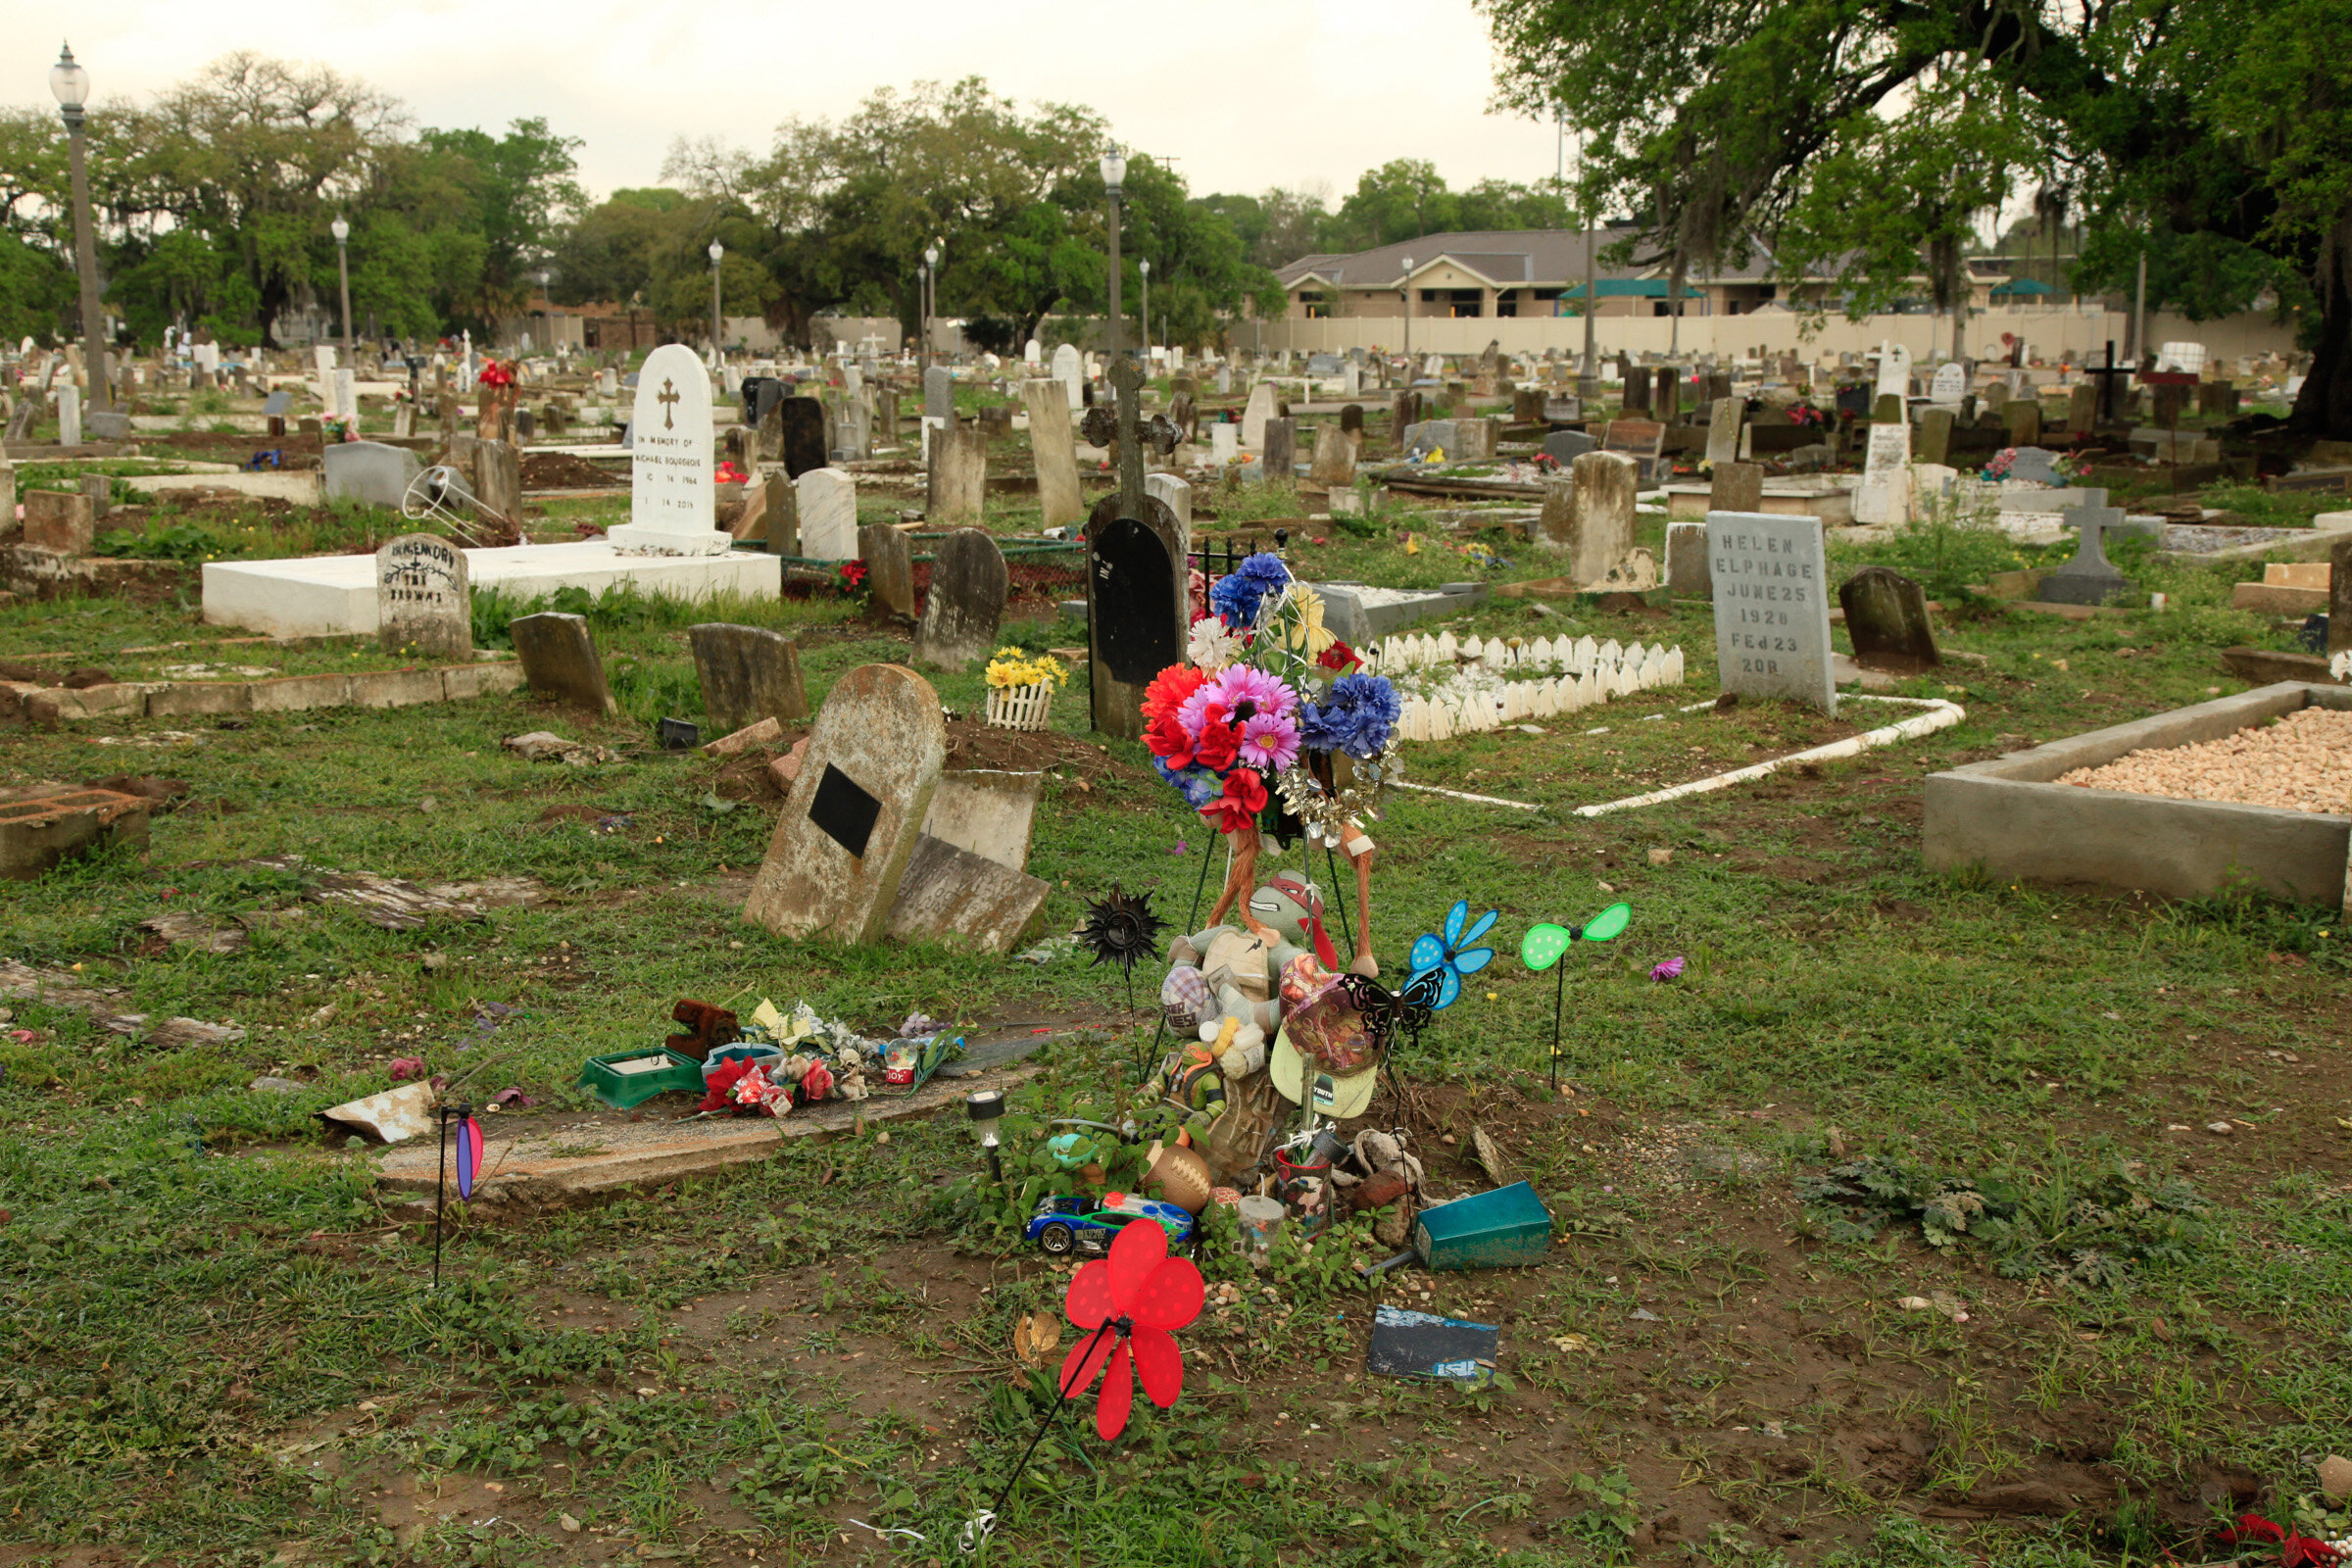  Holt Cemetery (Potter's Field), New Orleans, LA. 